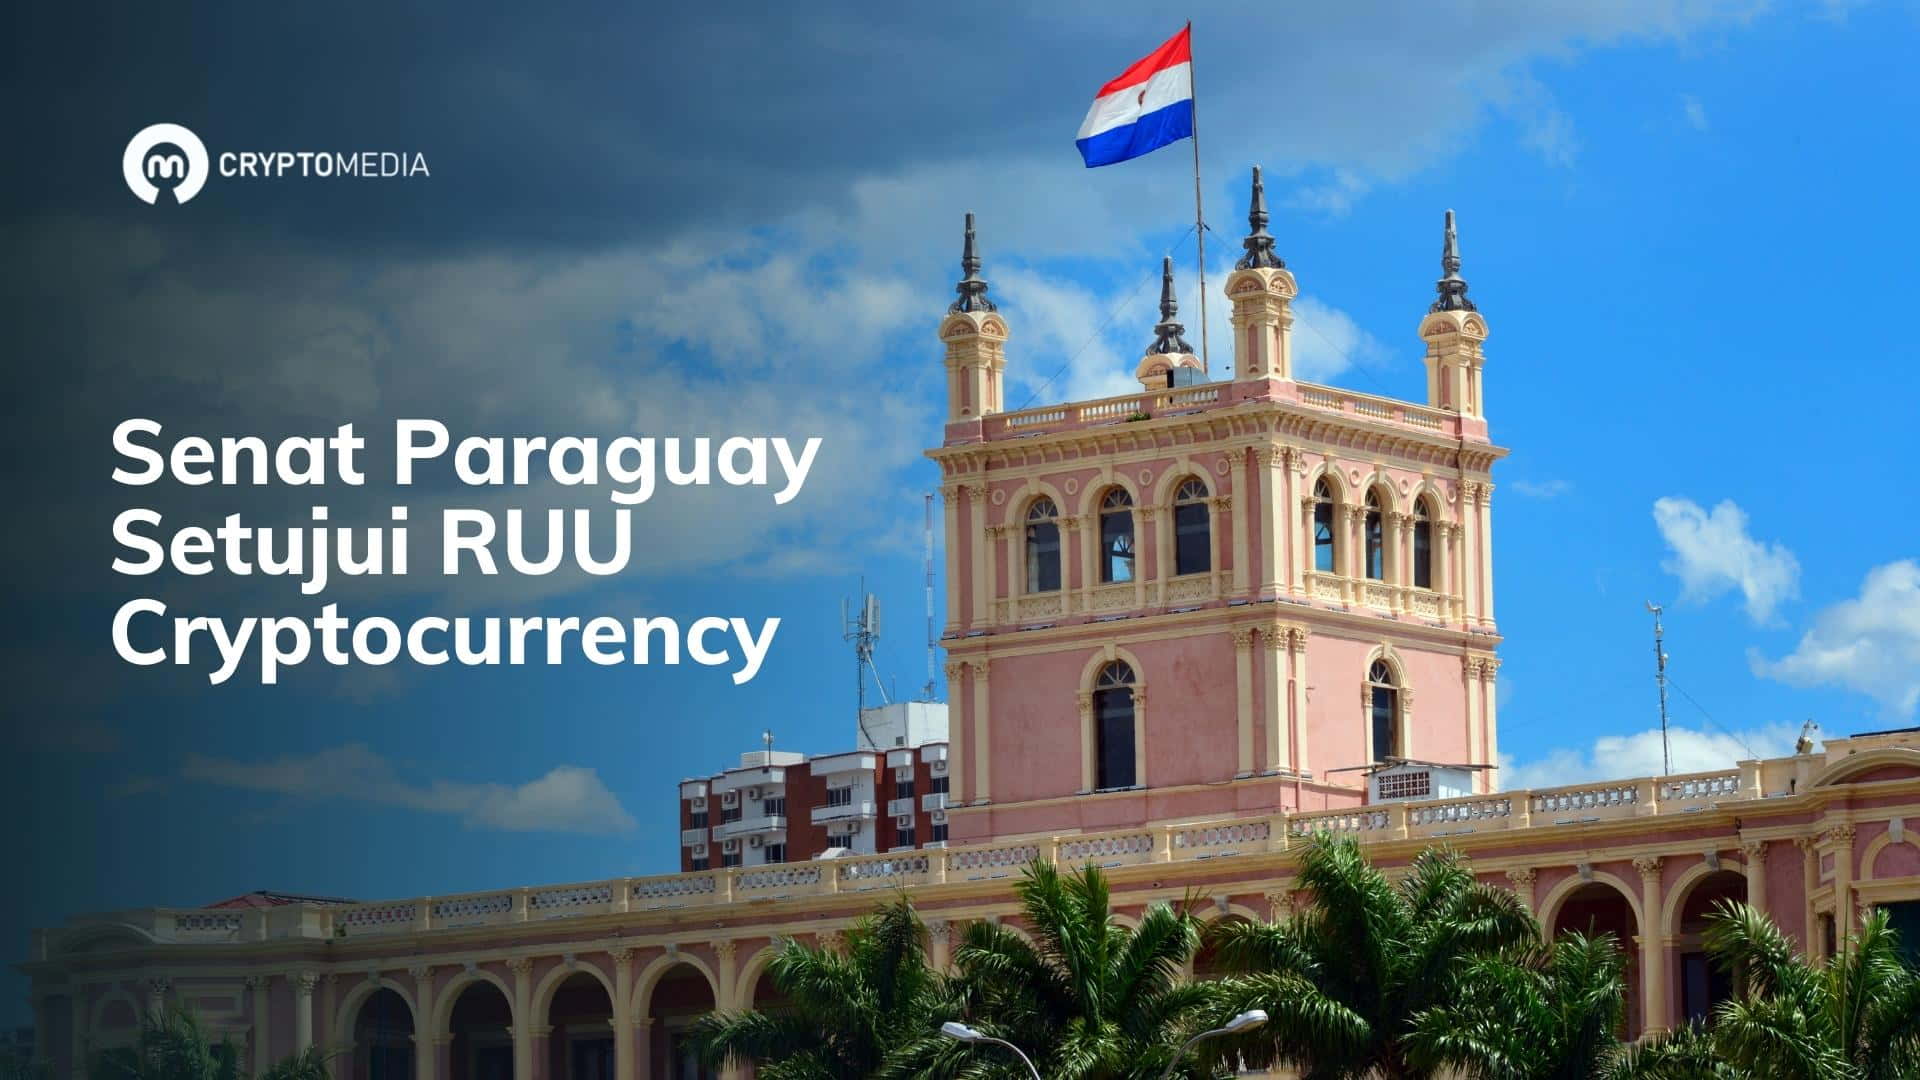 Senat Paraguay Setujui RUU Cryptocurrency